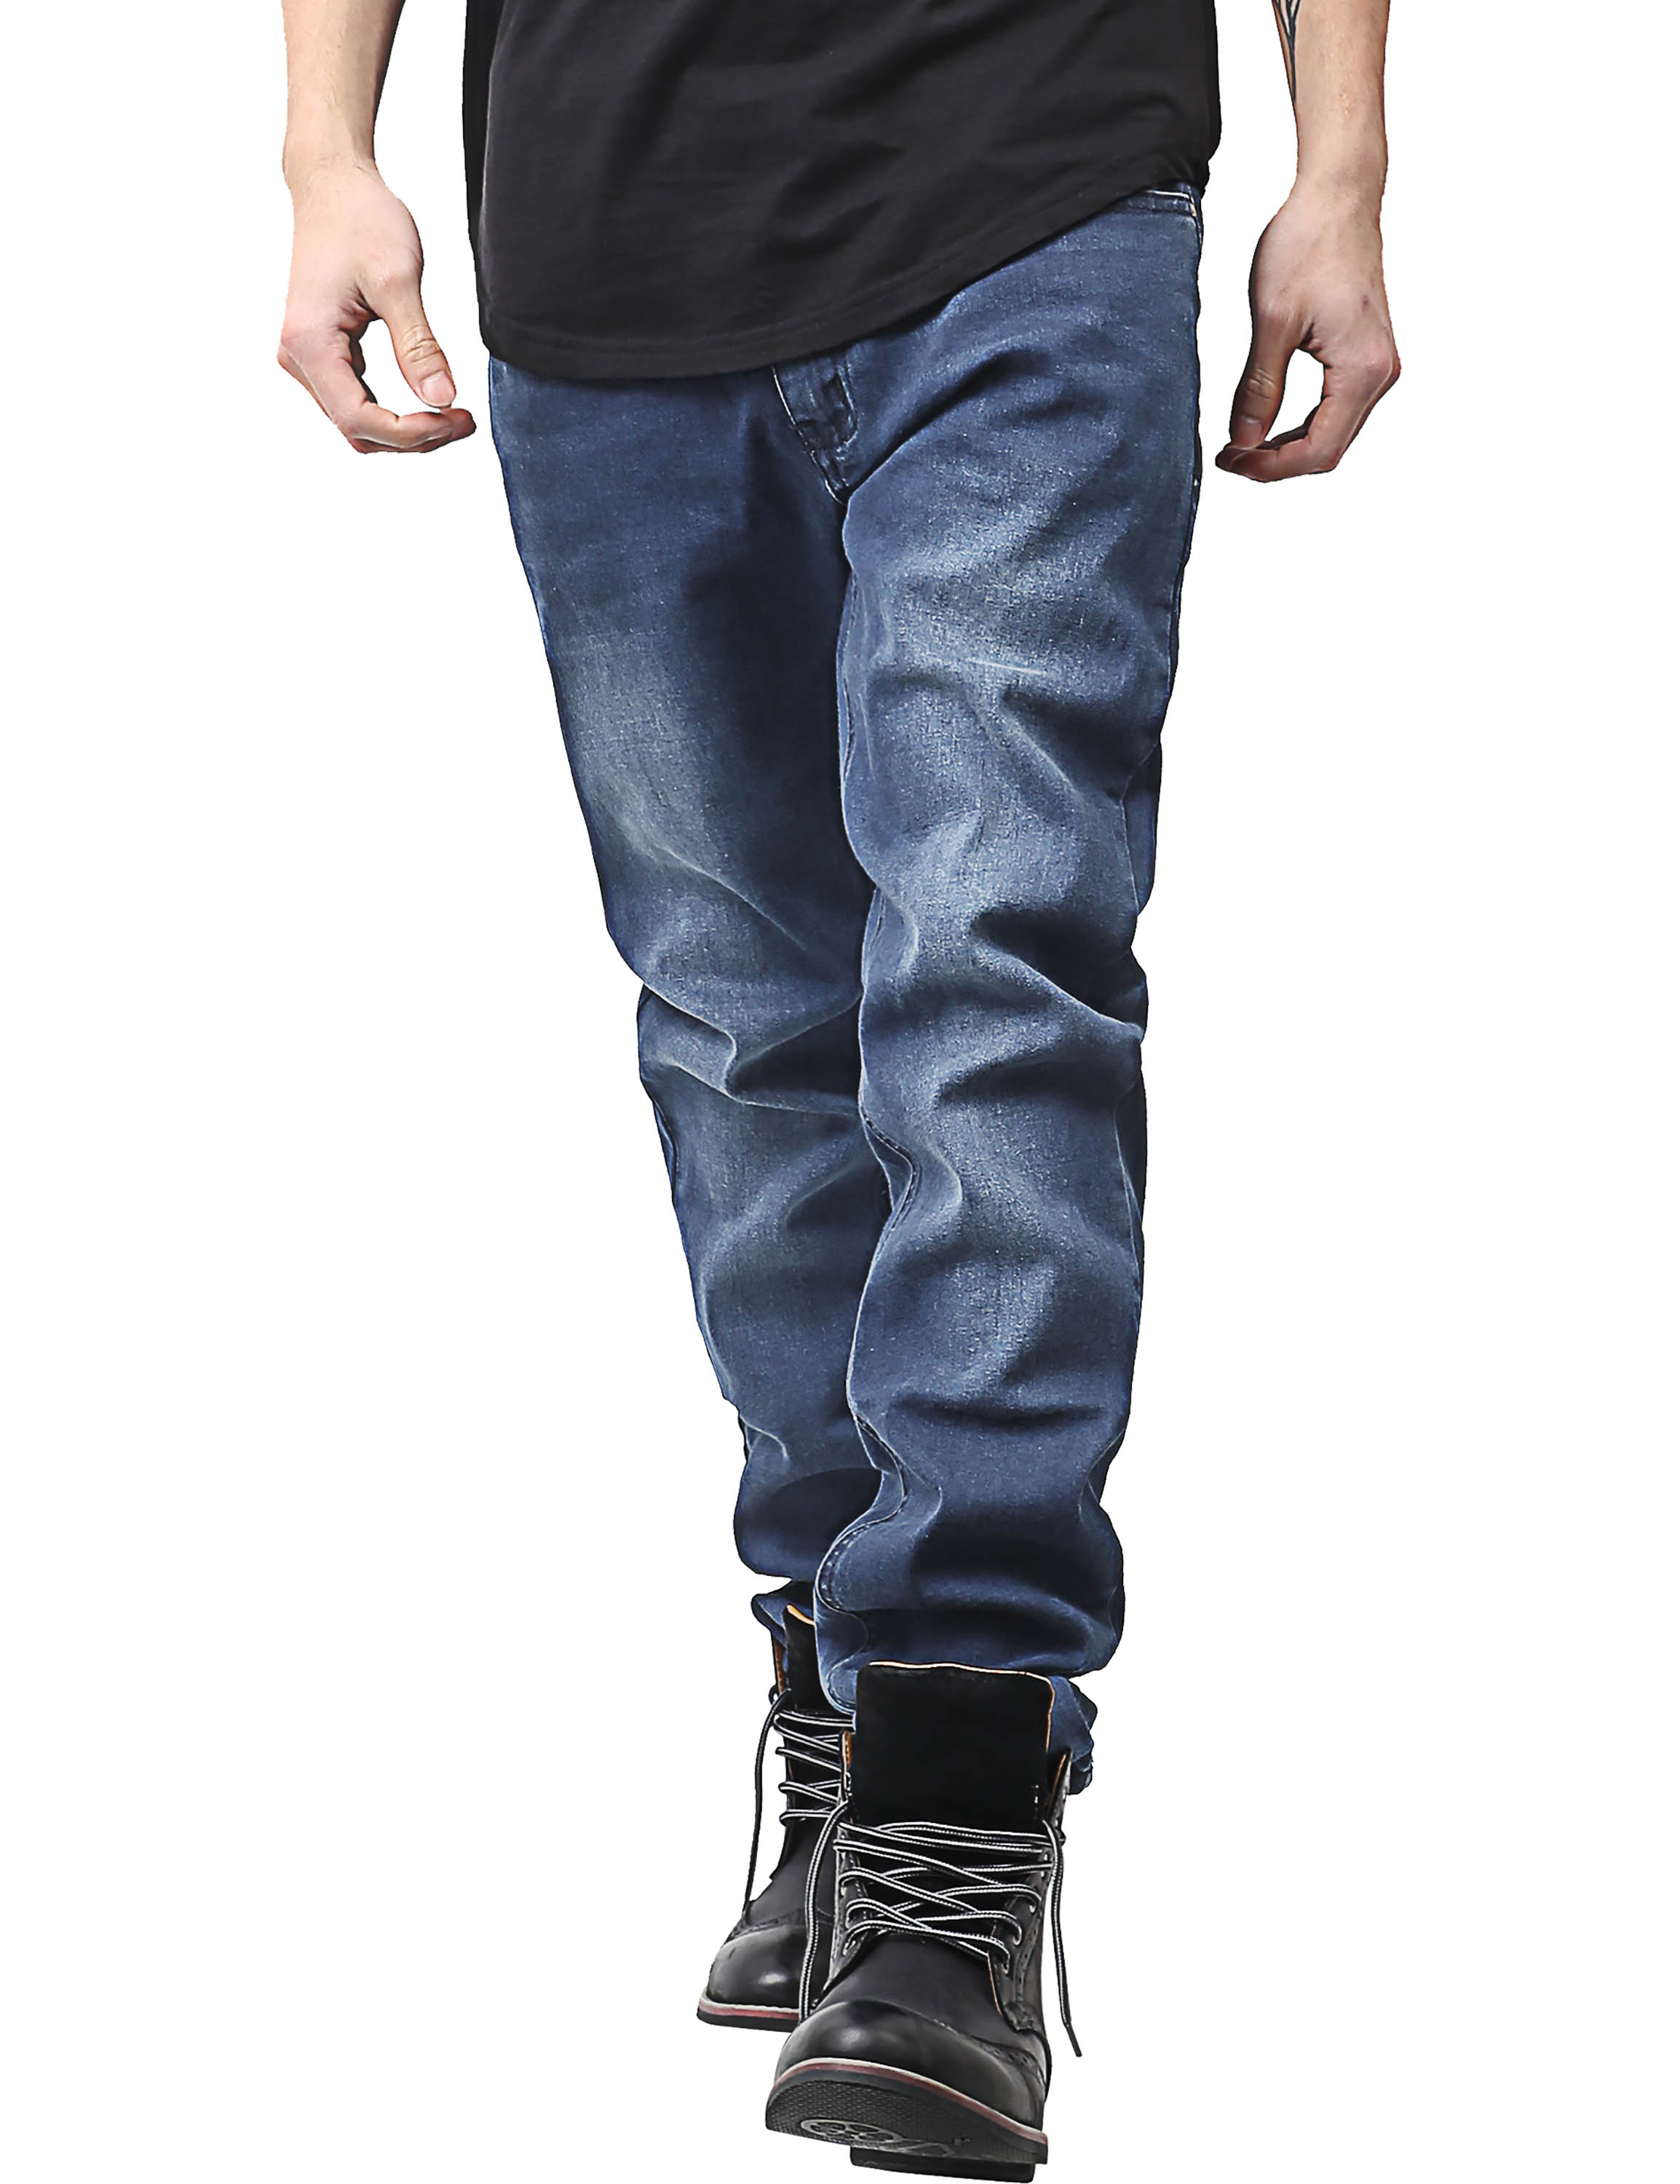 Ma Croix Mens Skinny Jeans Stretch Skinny Fit Slim Denim Pants - image 2 of 6